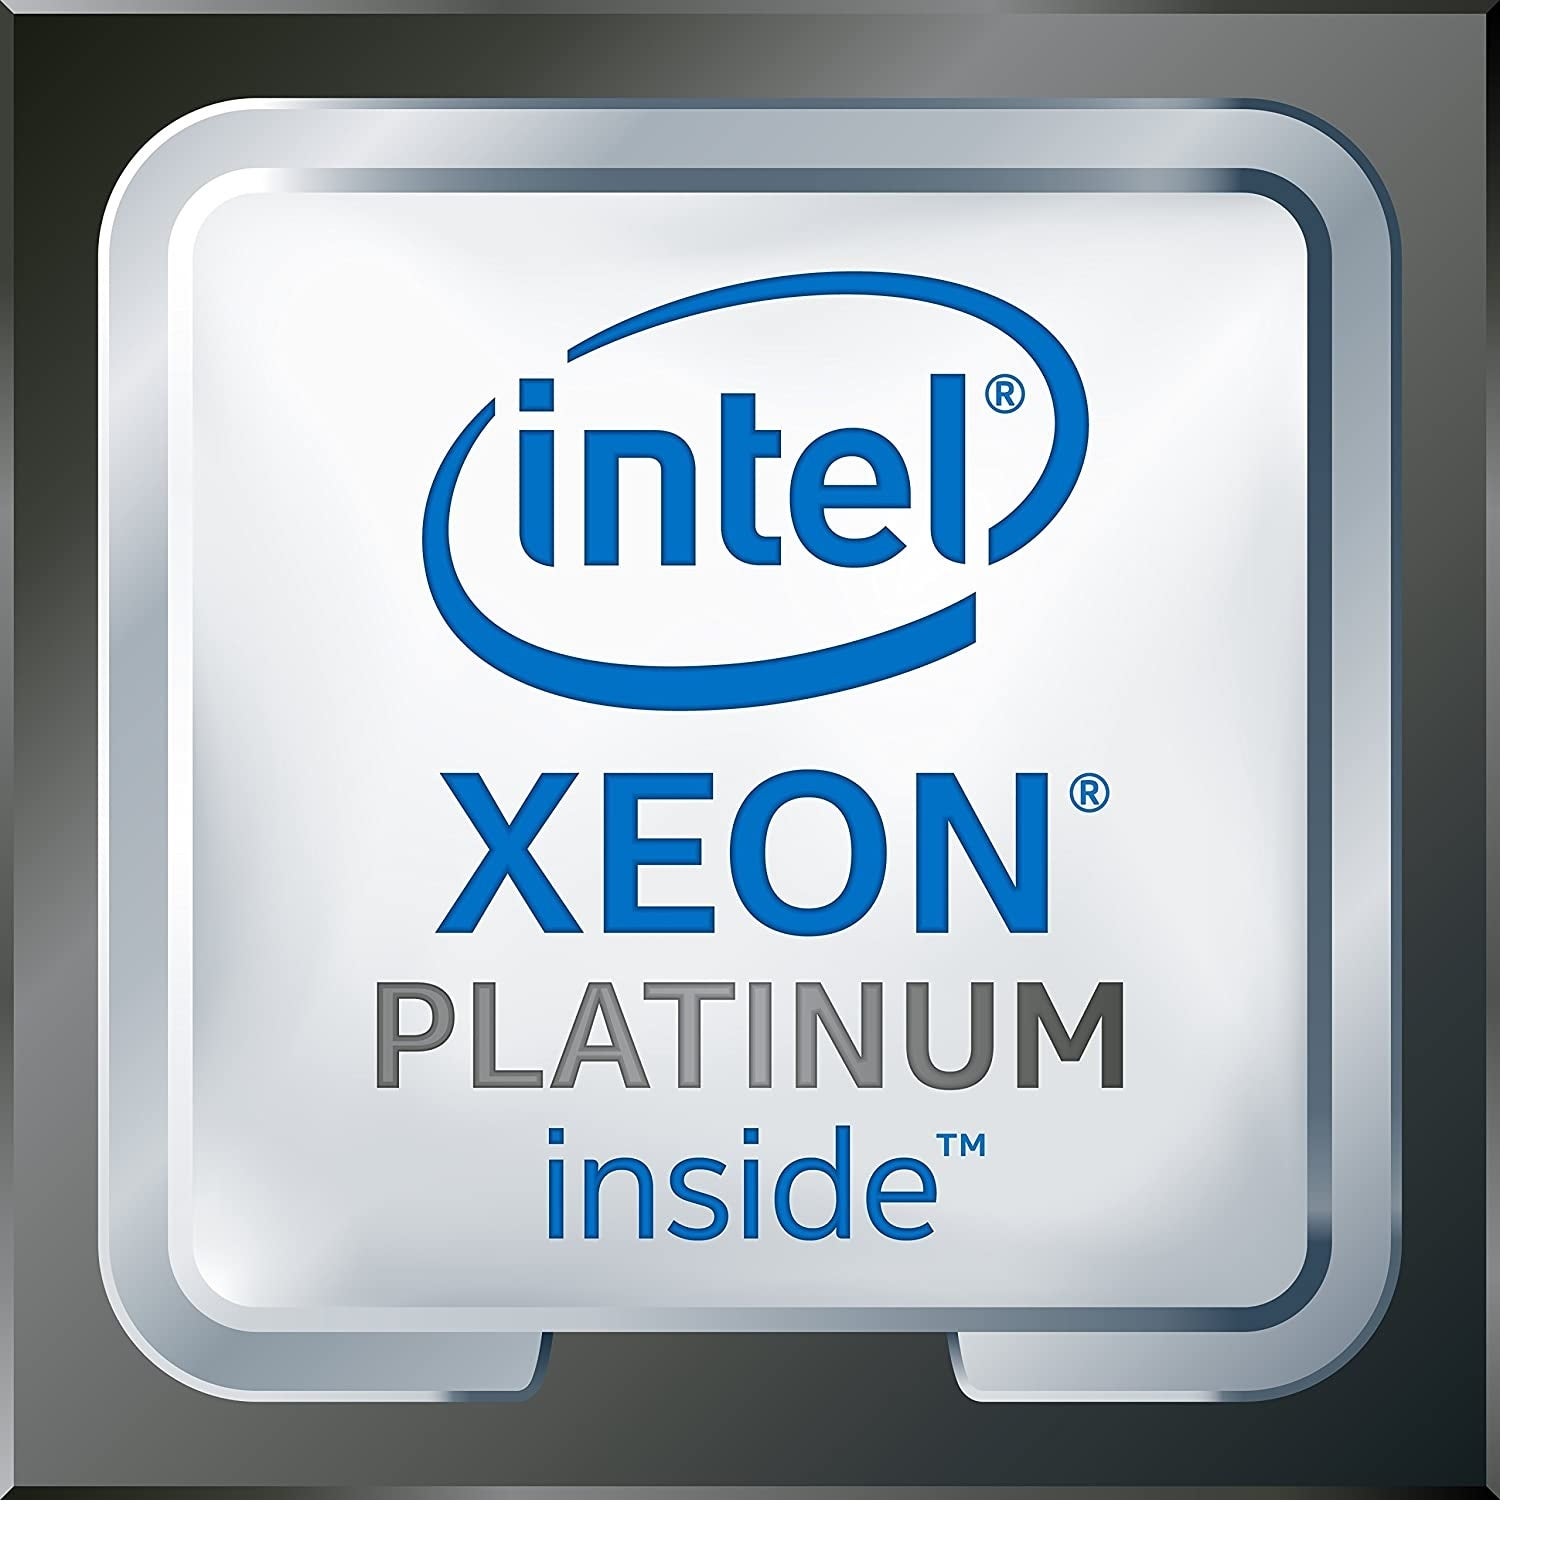 Intel Xeon Platinum 8380 2.30GHz Processor